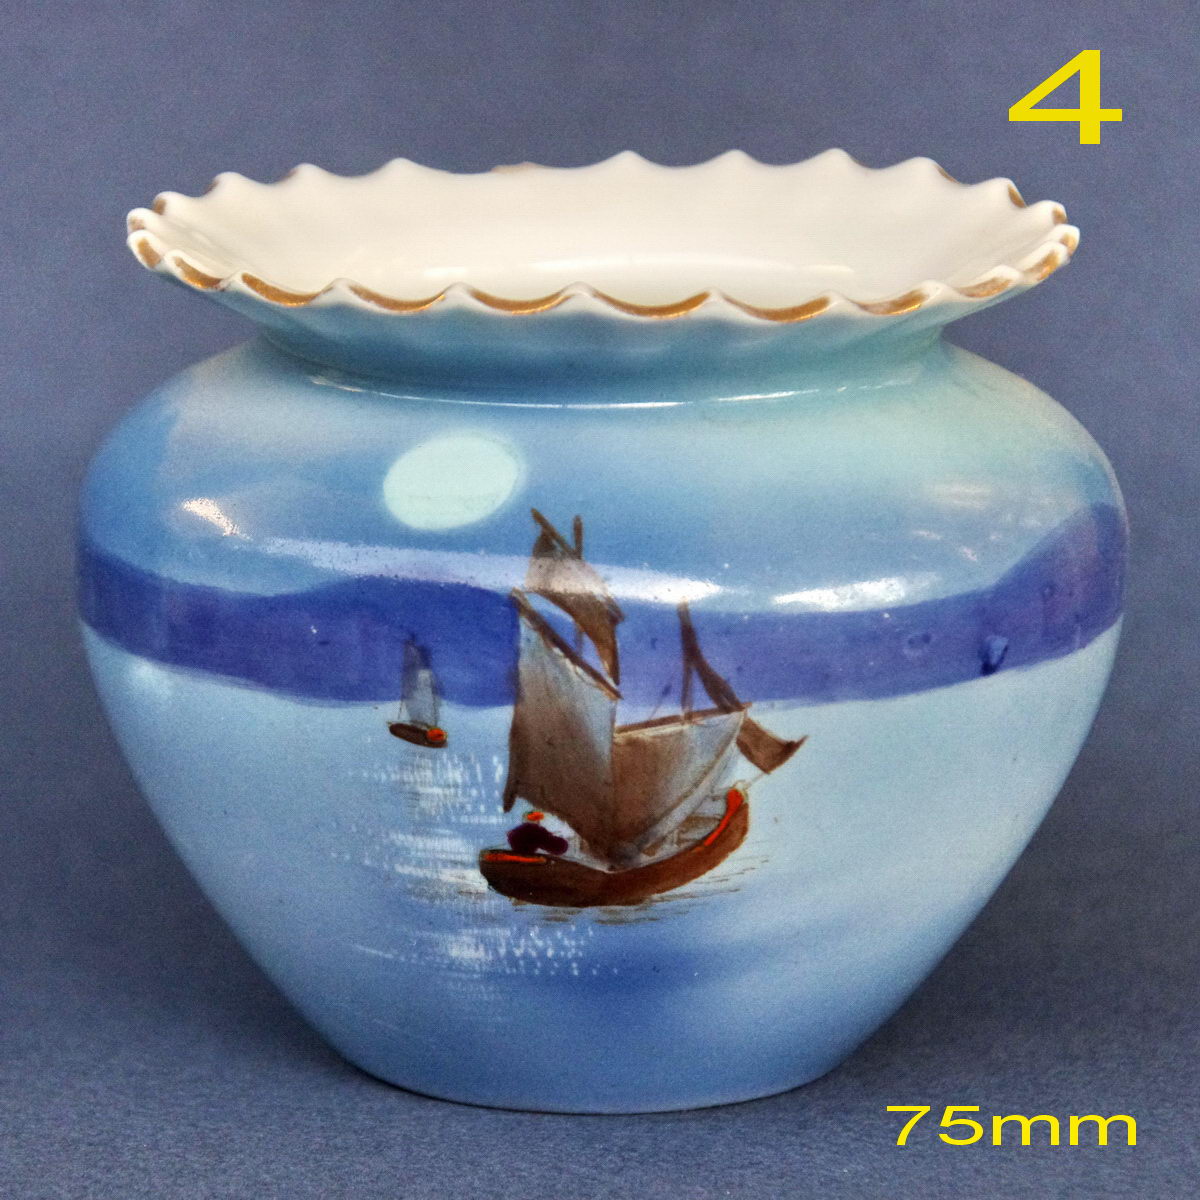 Shape 4 of Small China Vase Series